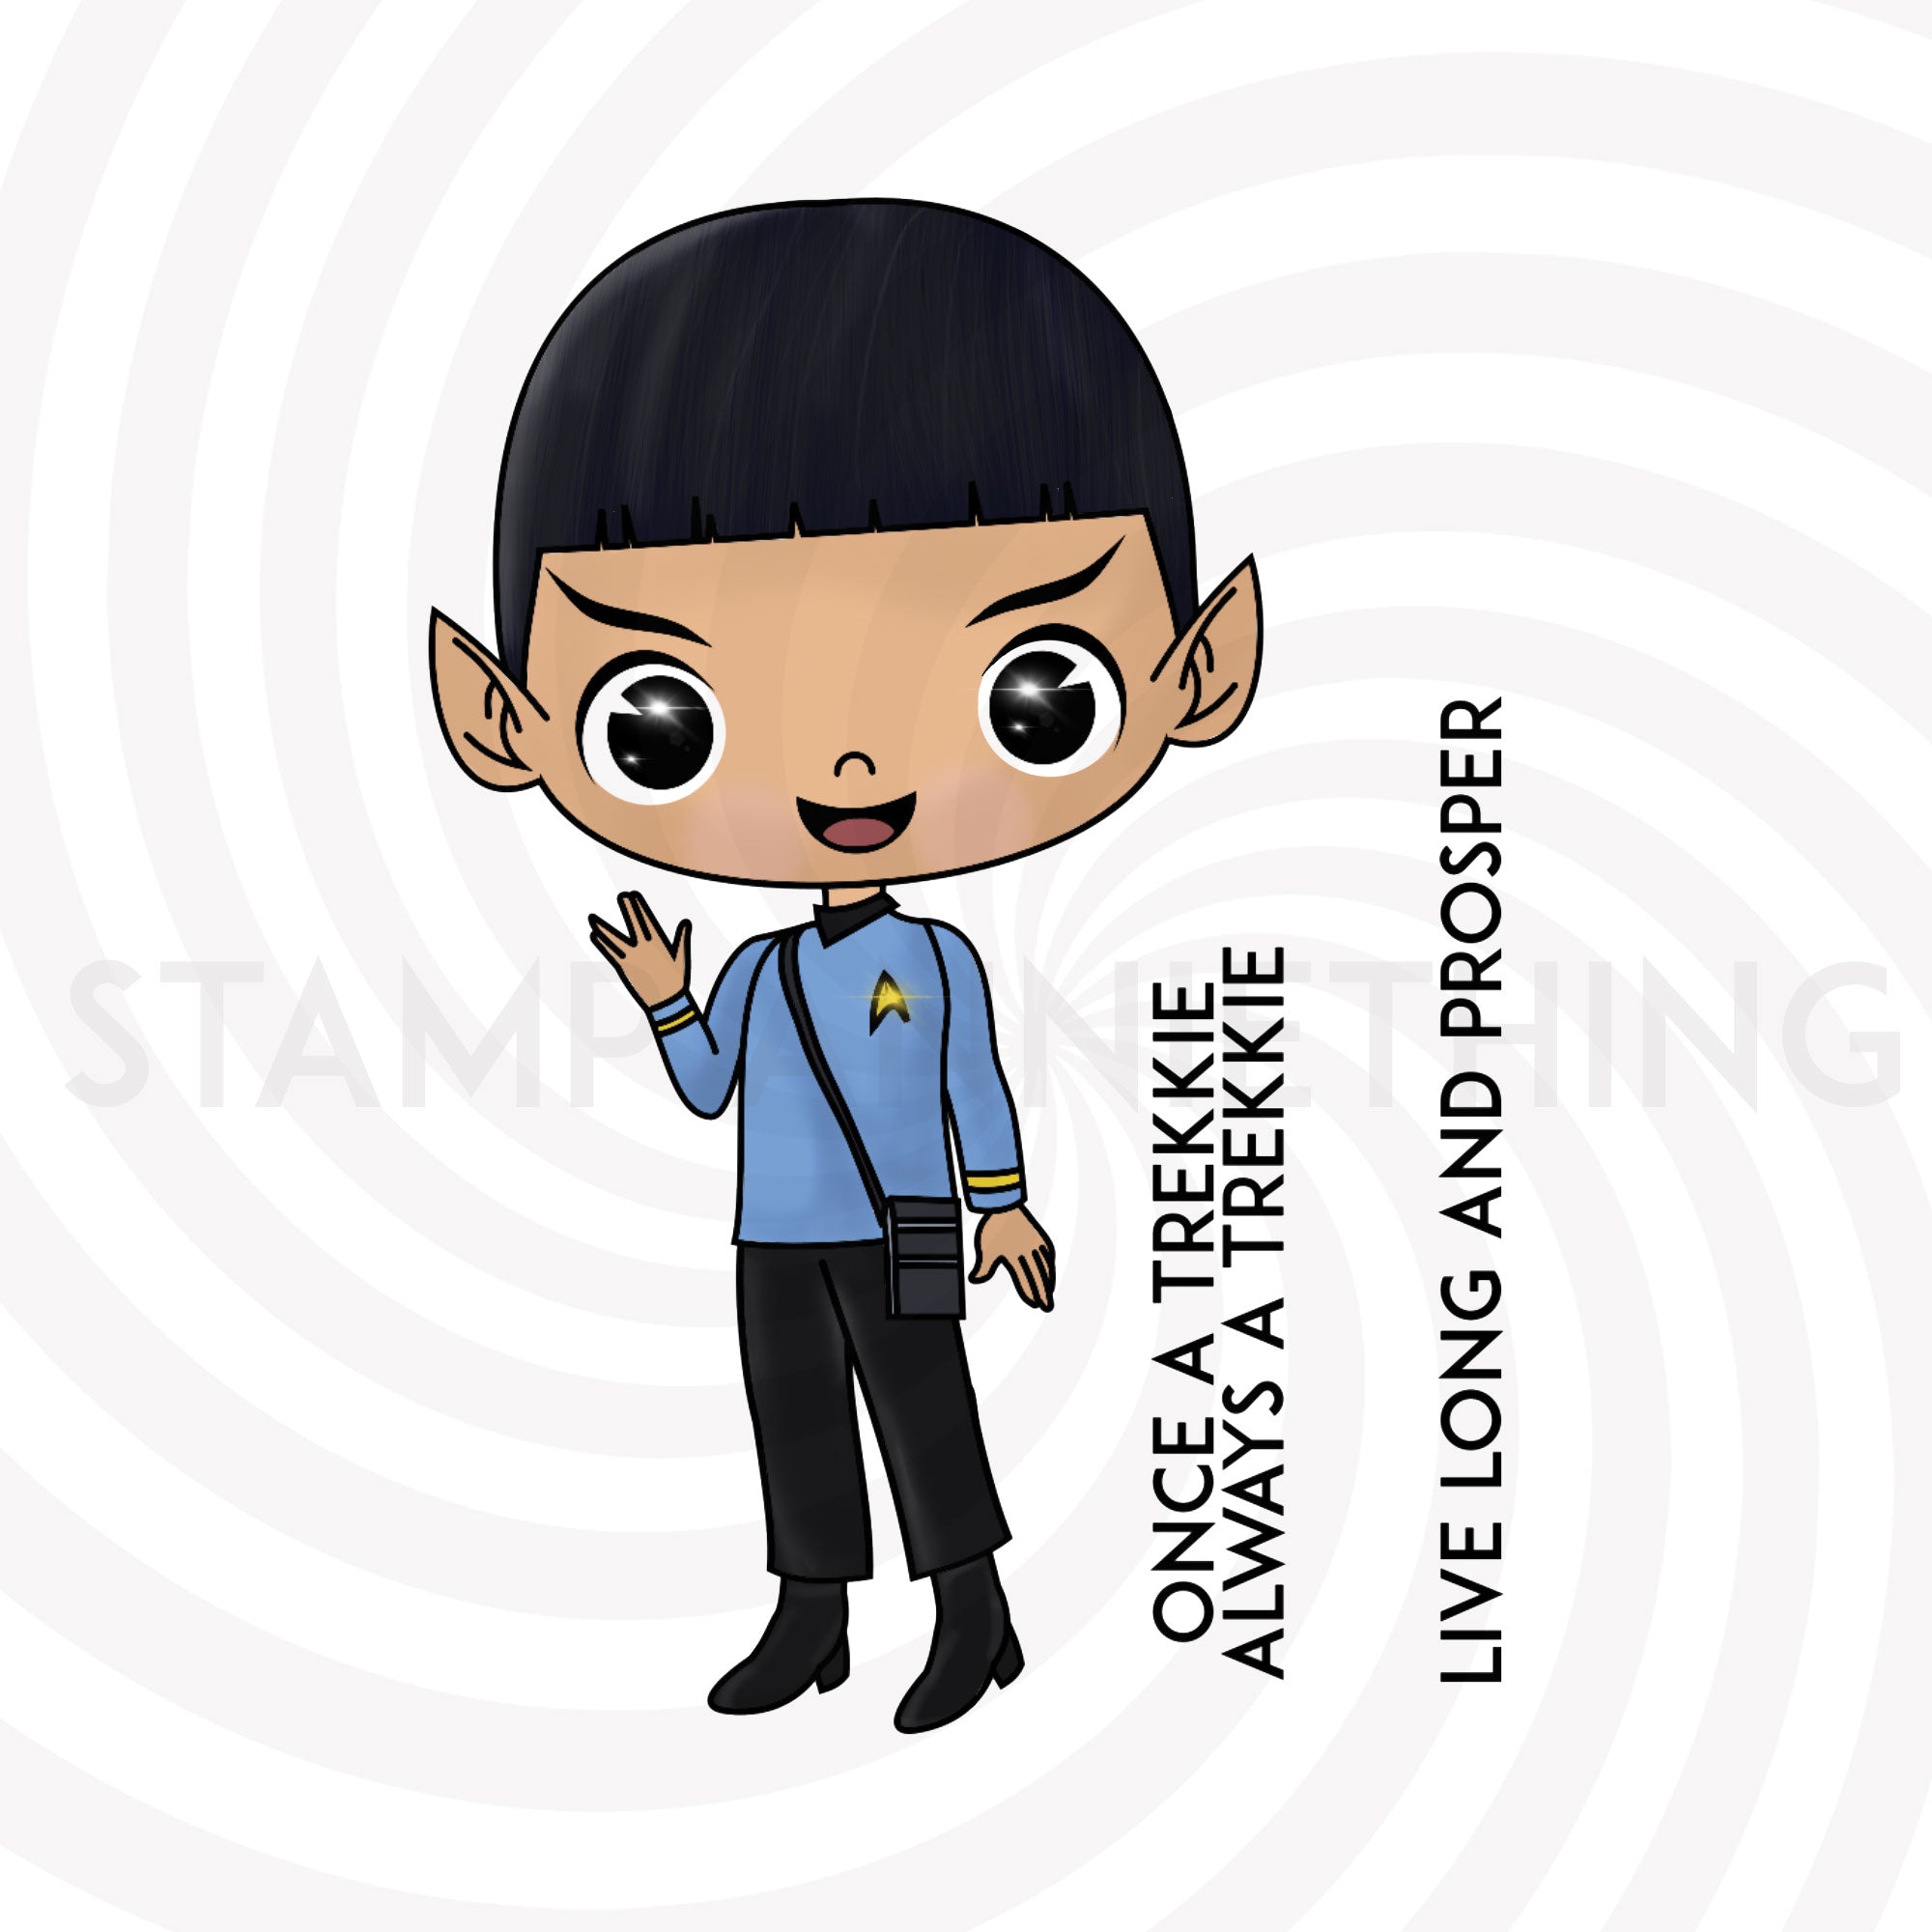 Spock - Live Long and Prosper